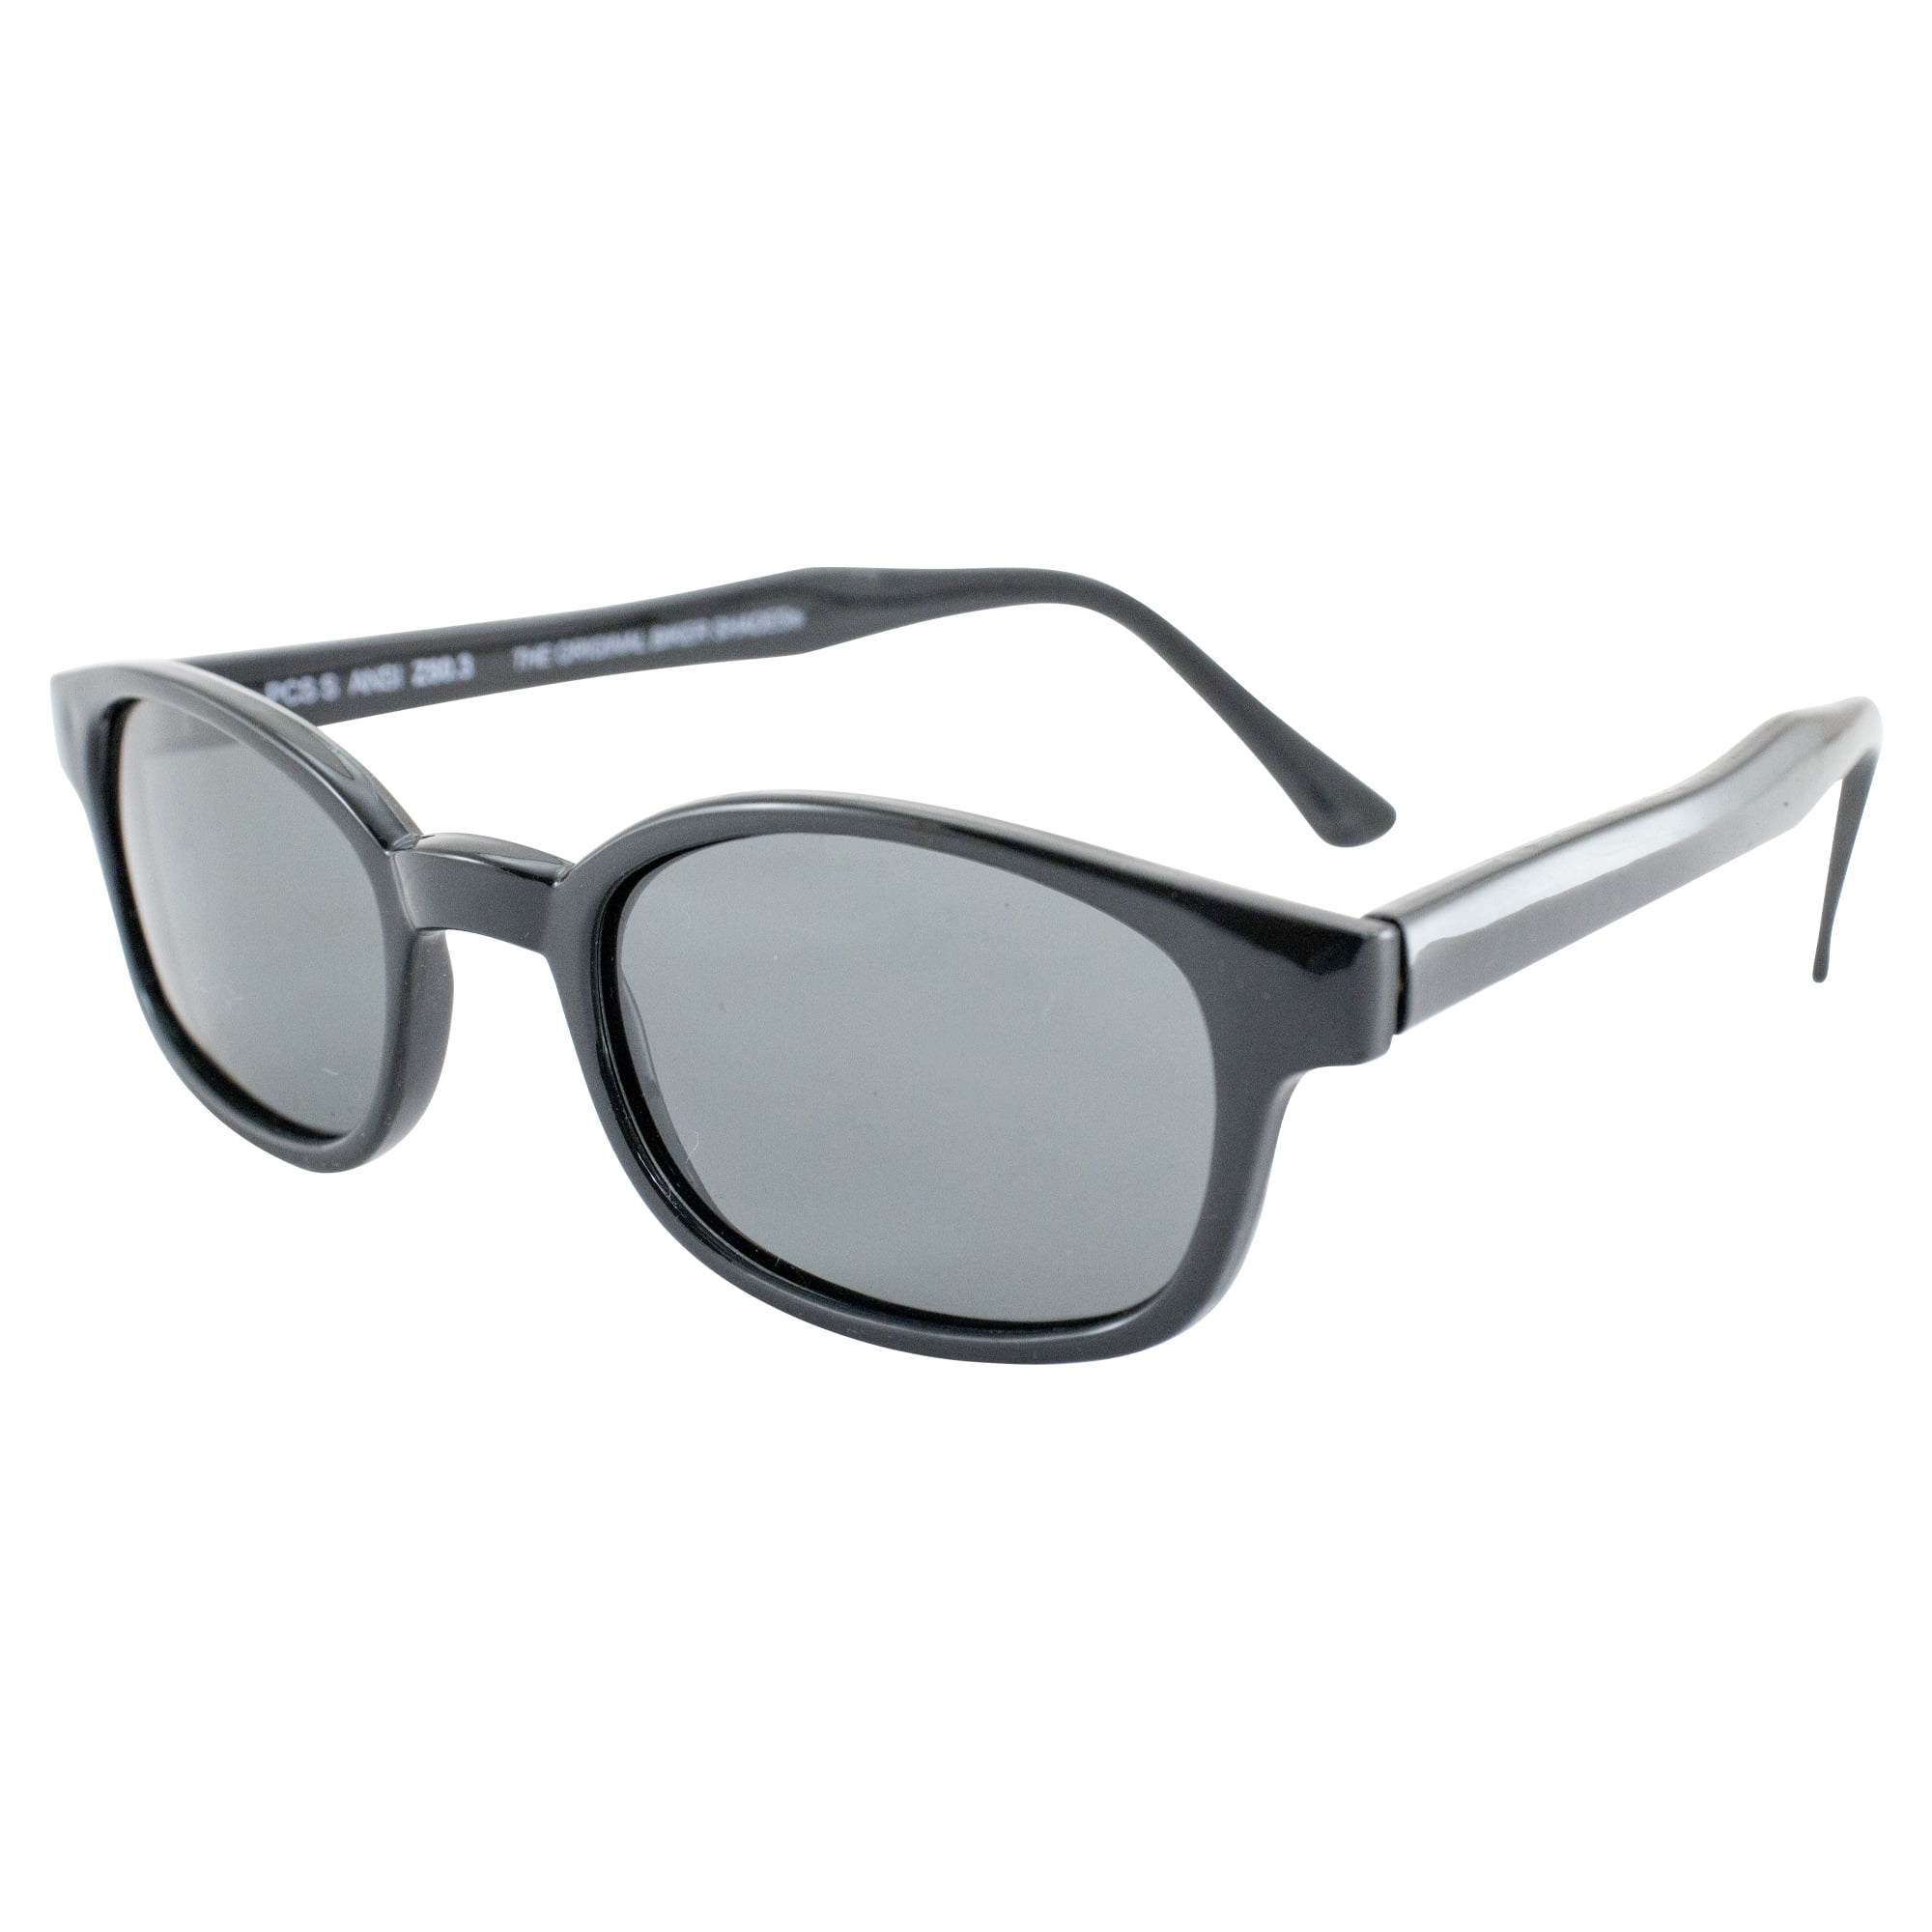 Original KD's Biker Sunglasses with Polarized Smoke Lenses